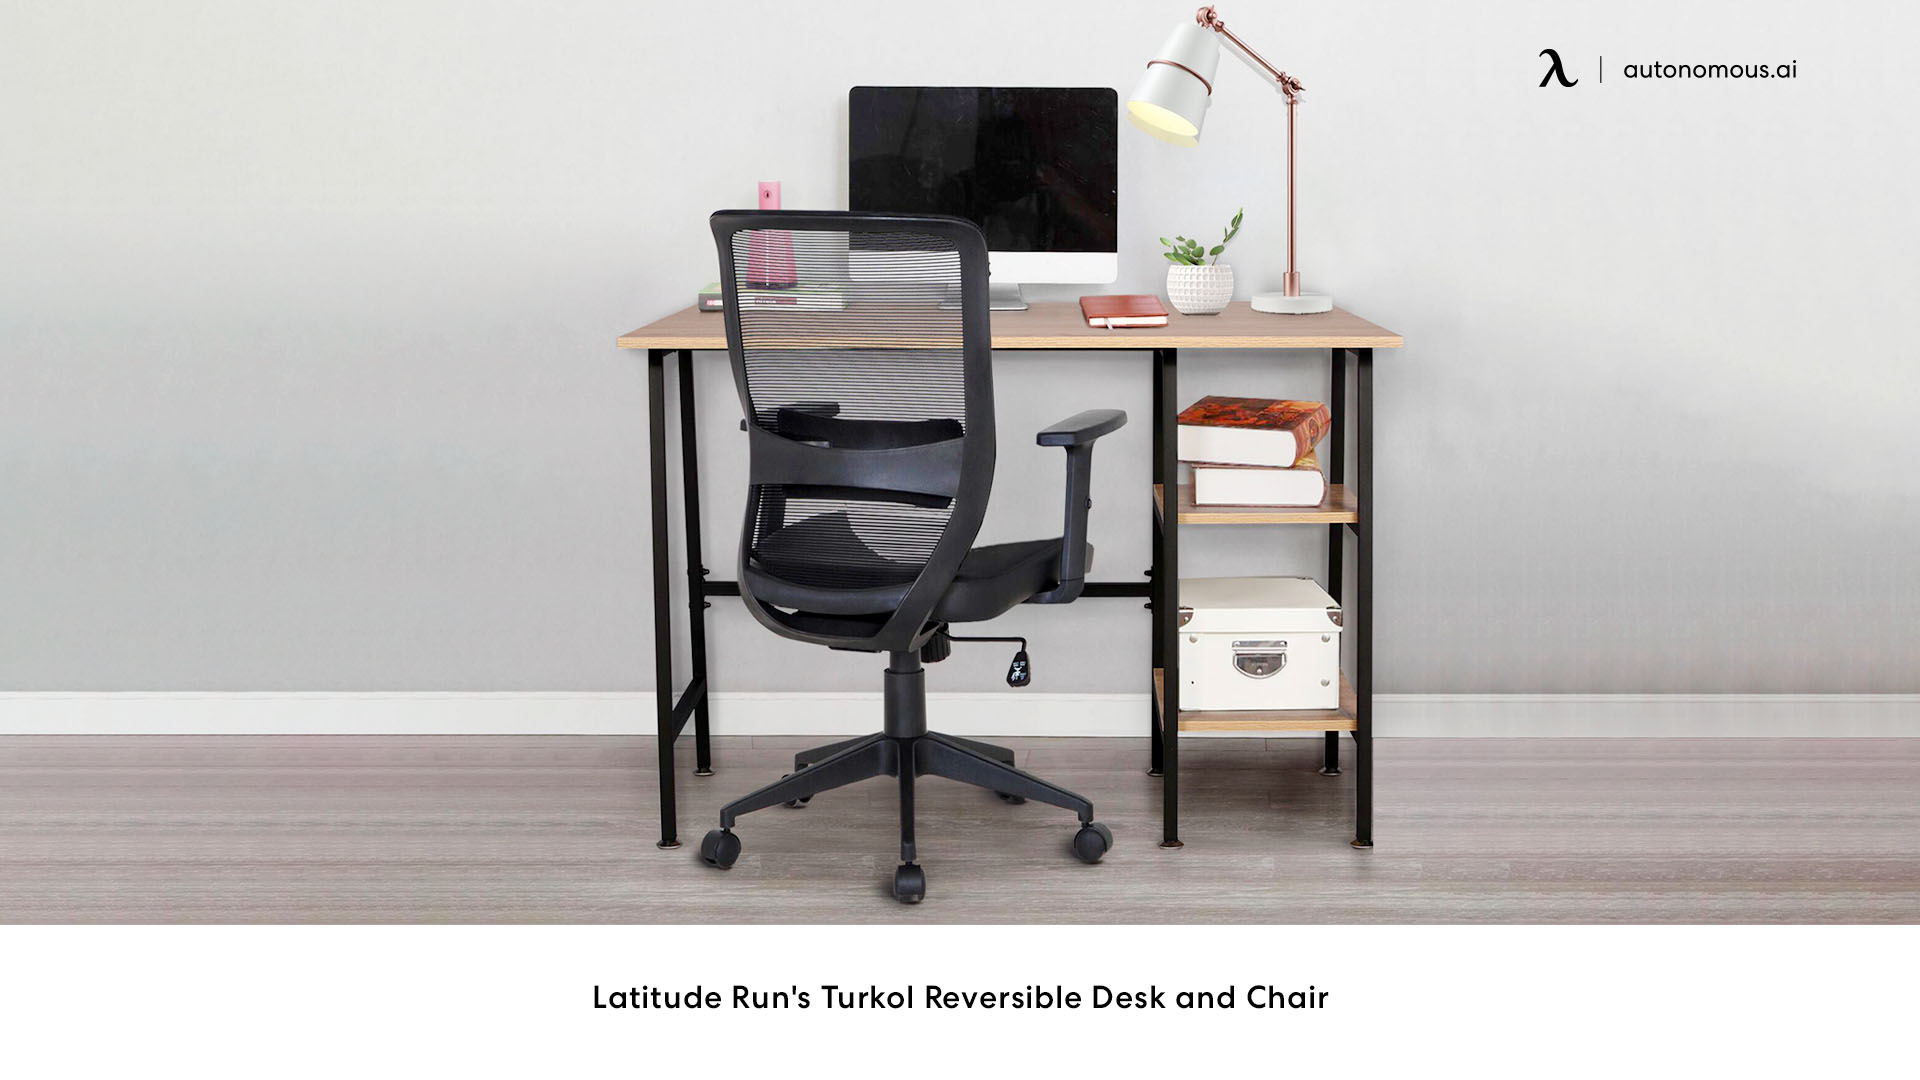 Latitude Run office chair and desk combo